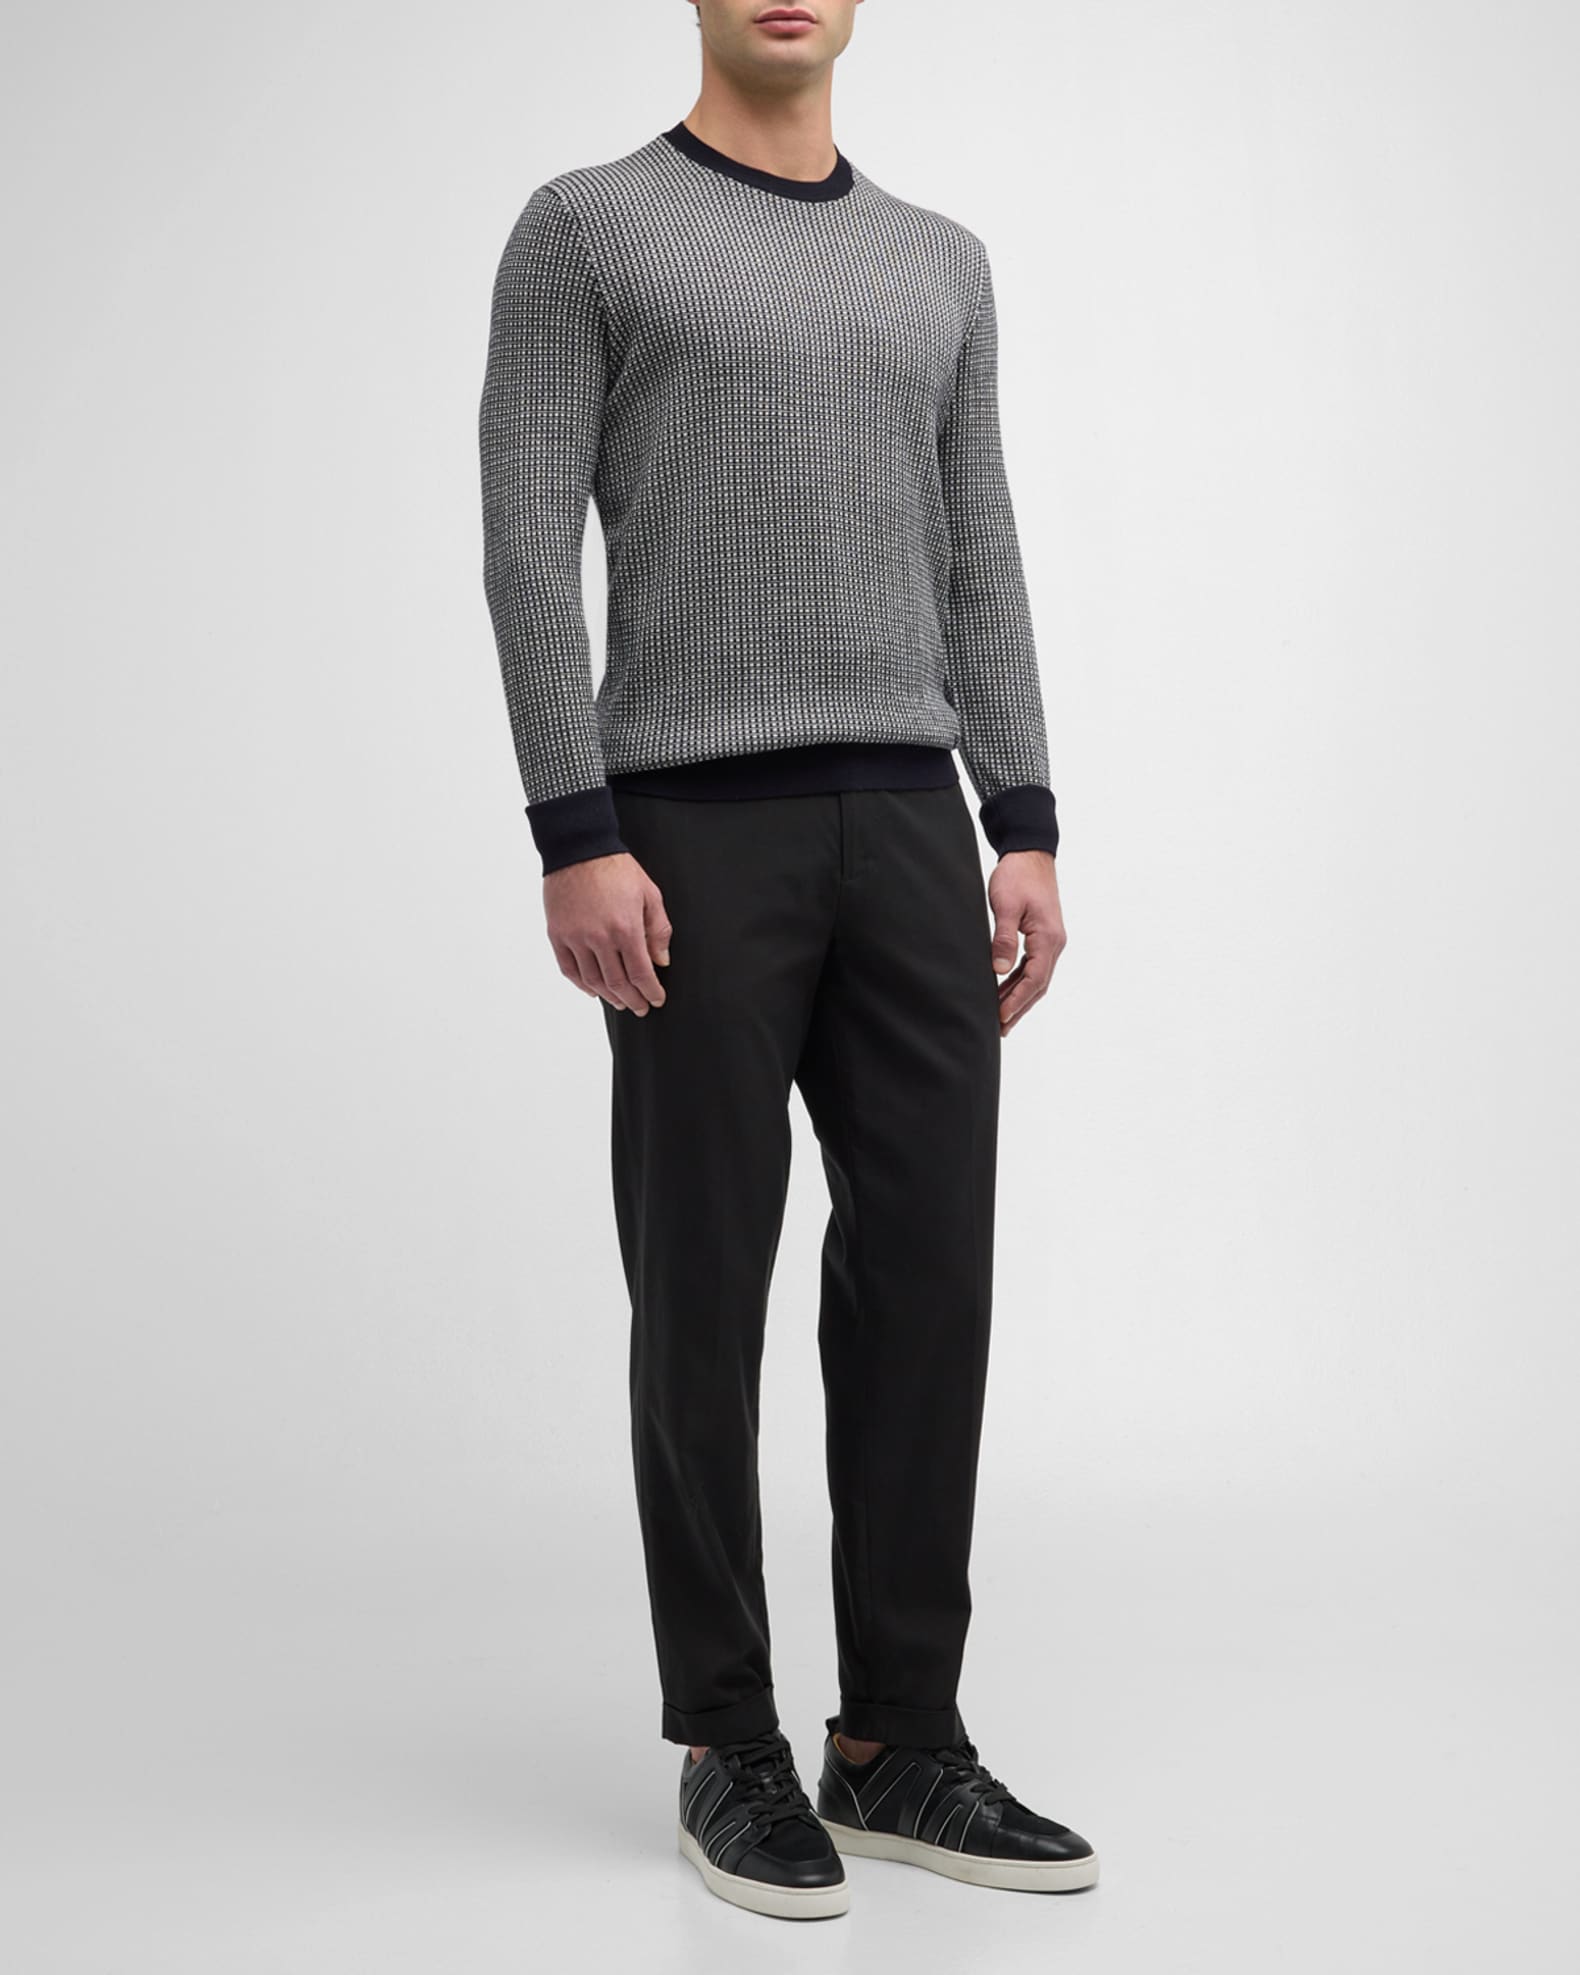 Emporio Armani Men's Wool-Knit Crewneck Sweater | Neiman Marcus